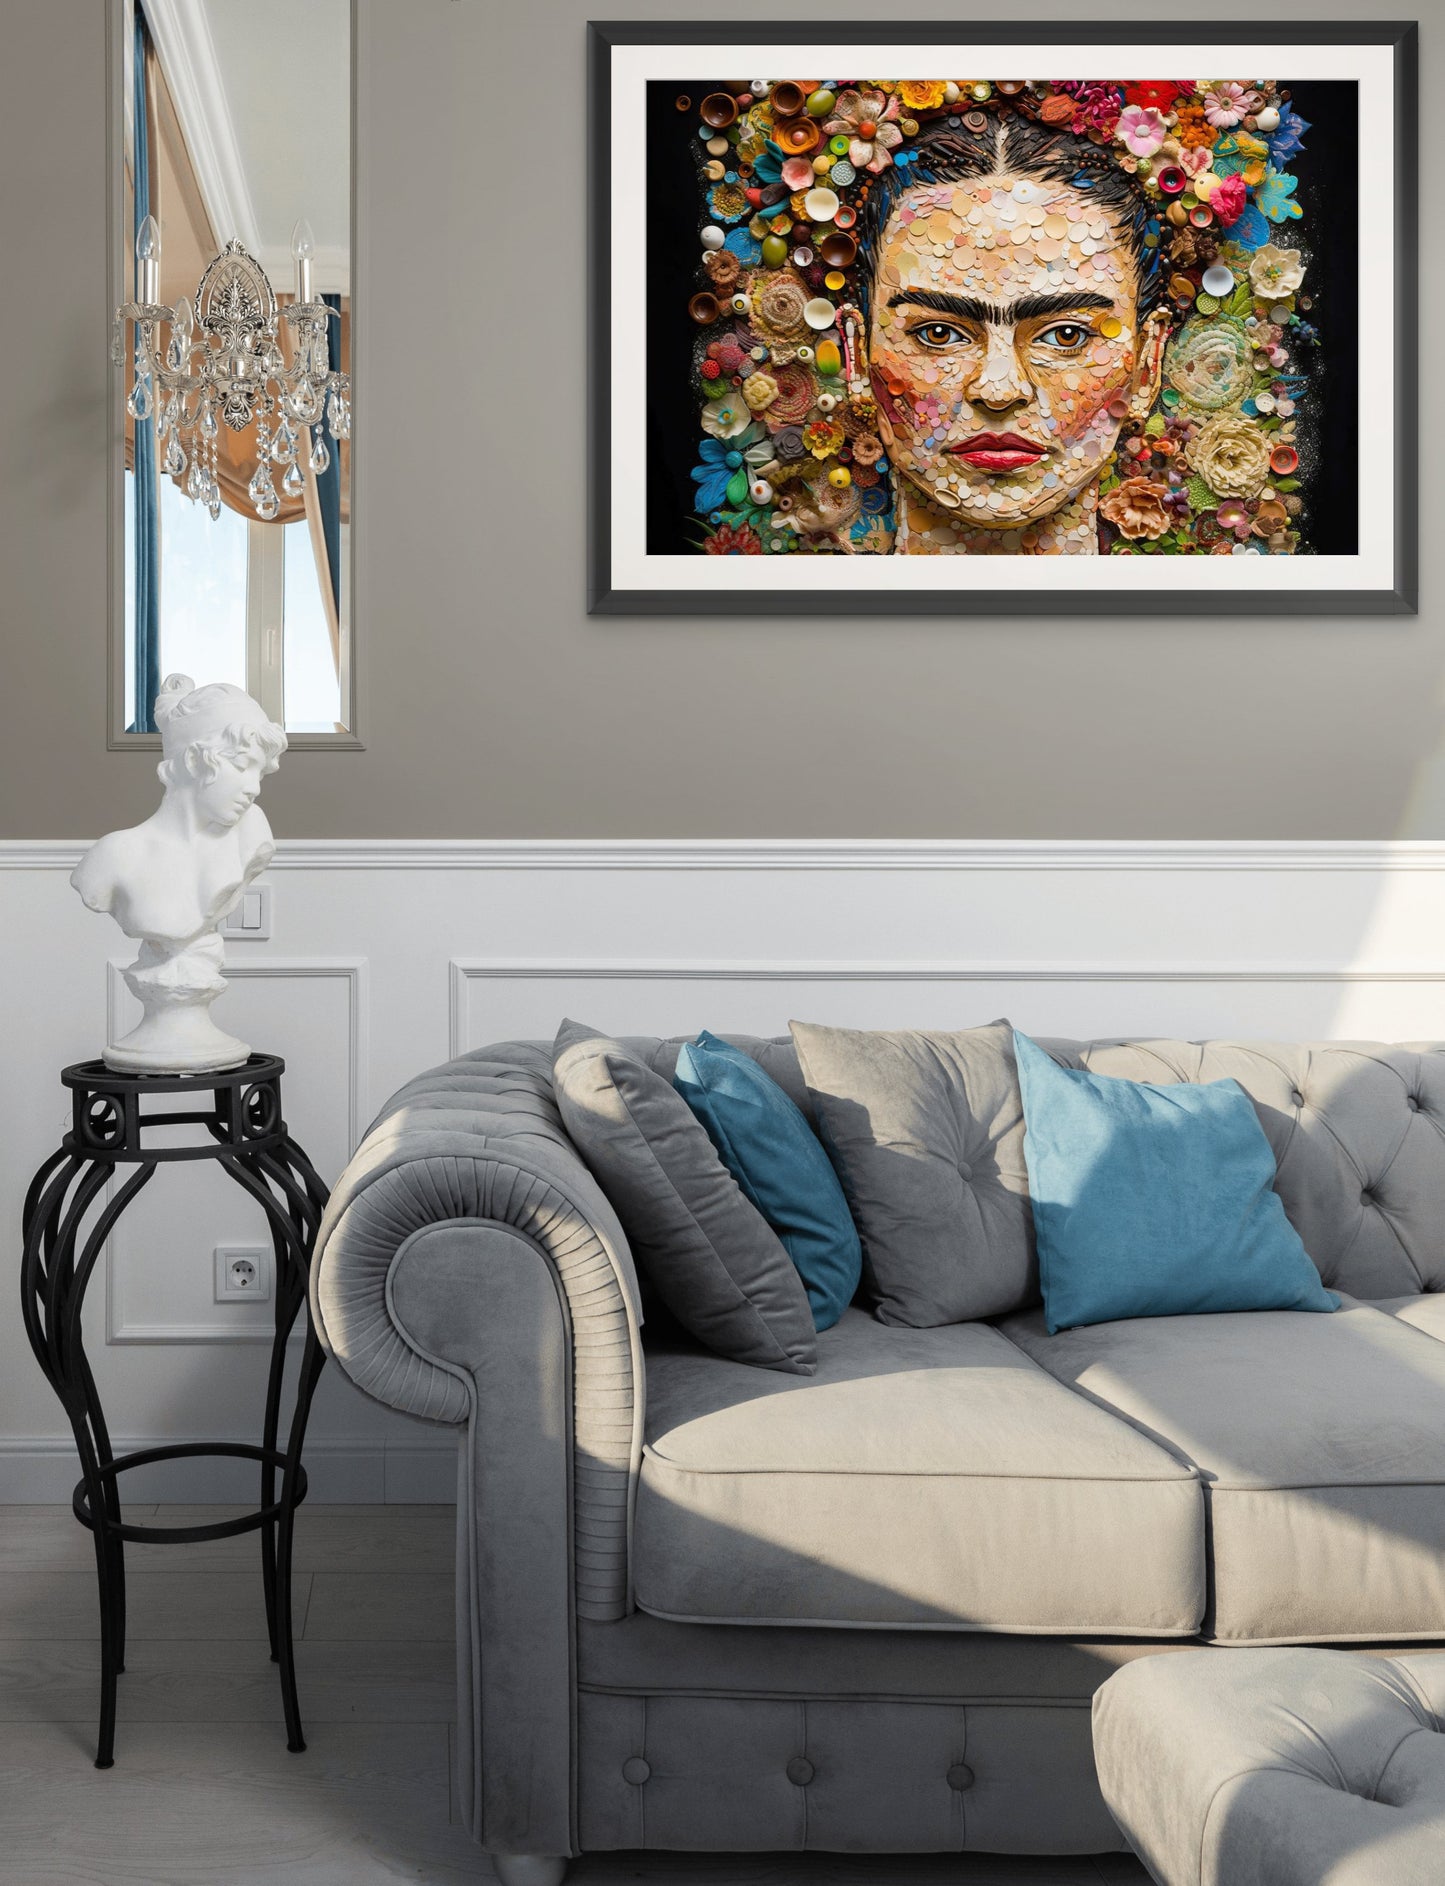 Frida Kahlo Portrait Print: AI Art Digital Download - Pixel Gallery